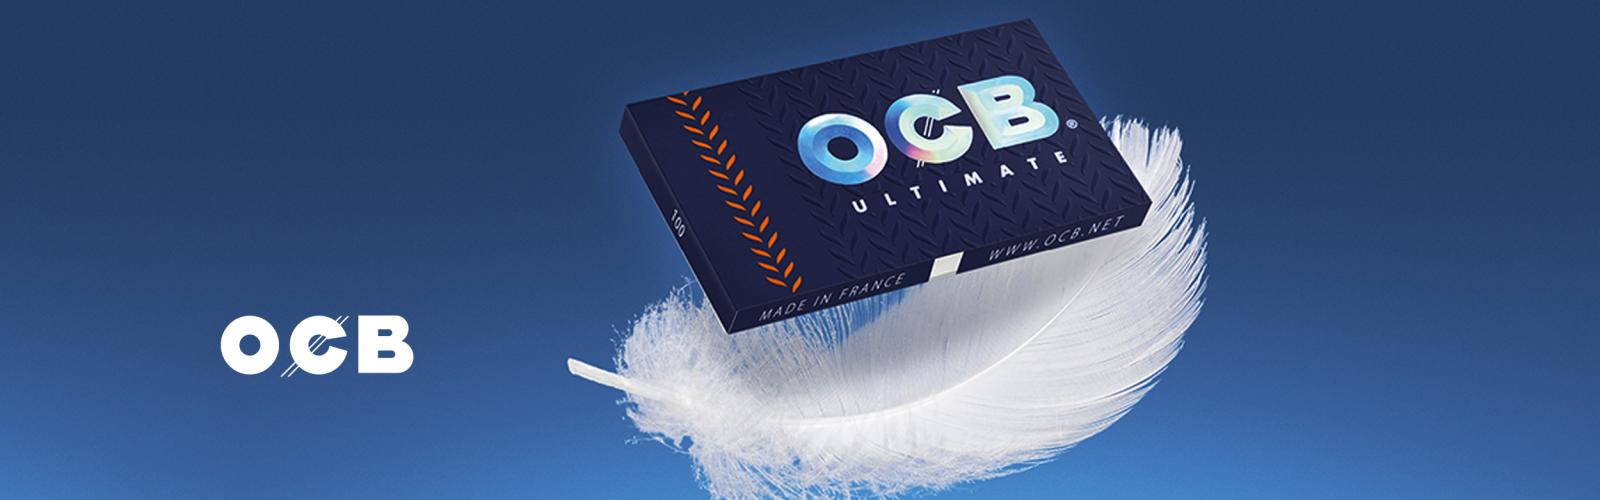 OCB products